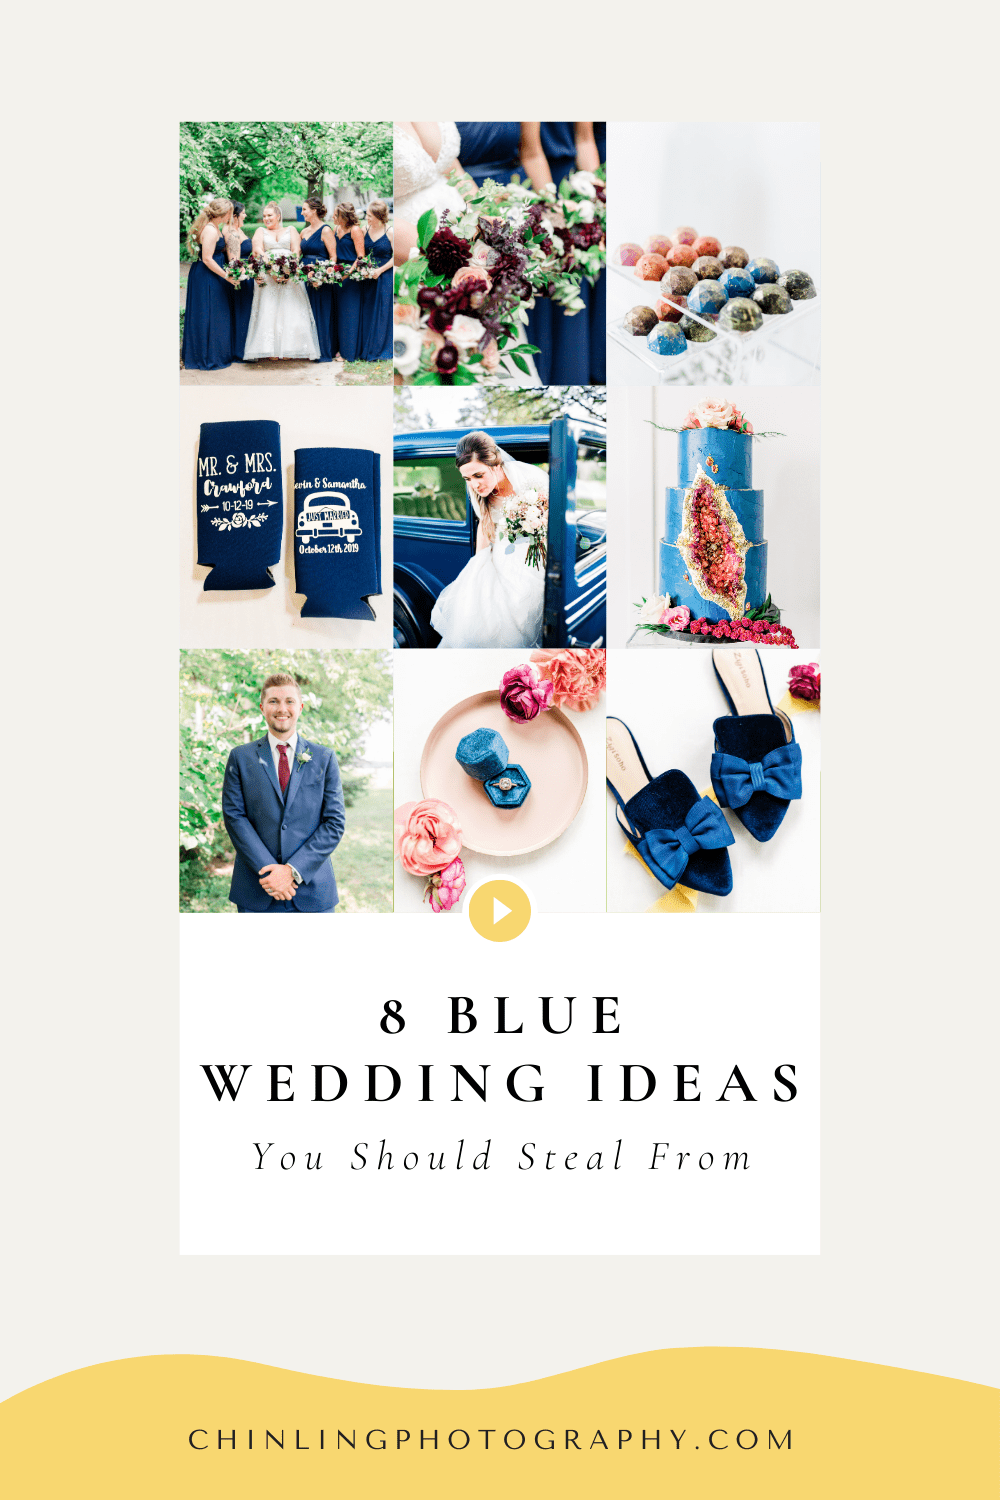 Blue wedding ideas photo collage